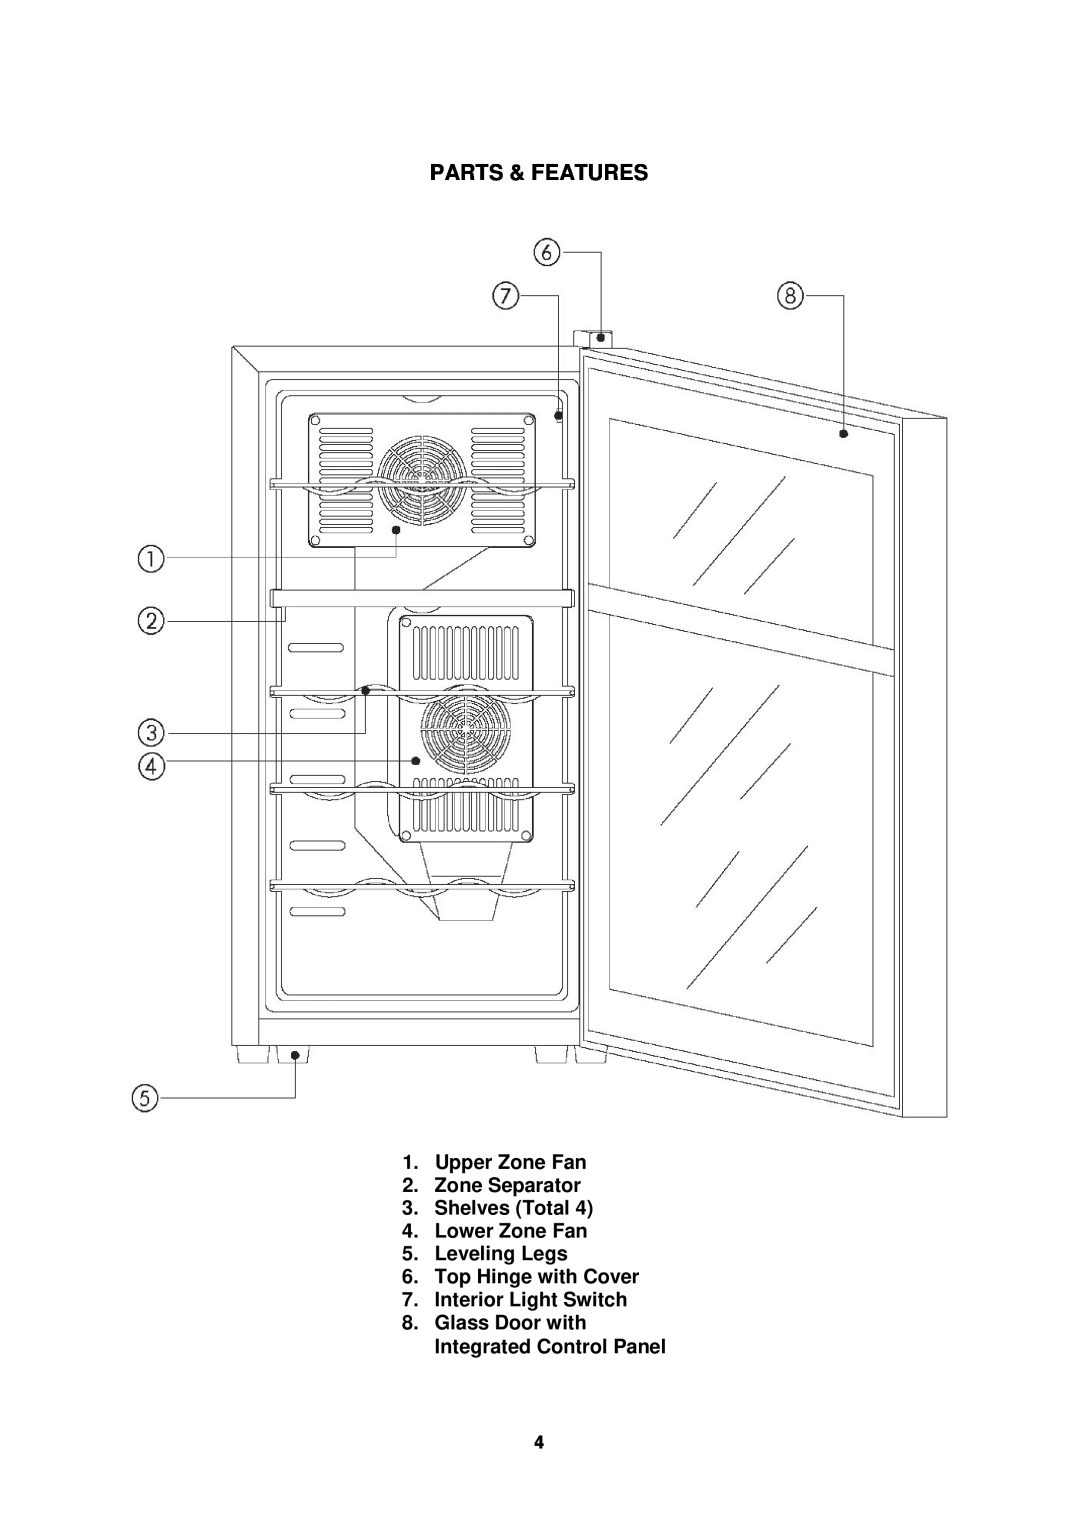 Avanti EWC1802DZ manual Parts & Features, Upper Zone Fan 2. Zone Separator 3. Shelves Total 